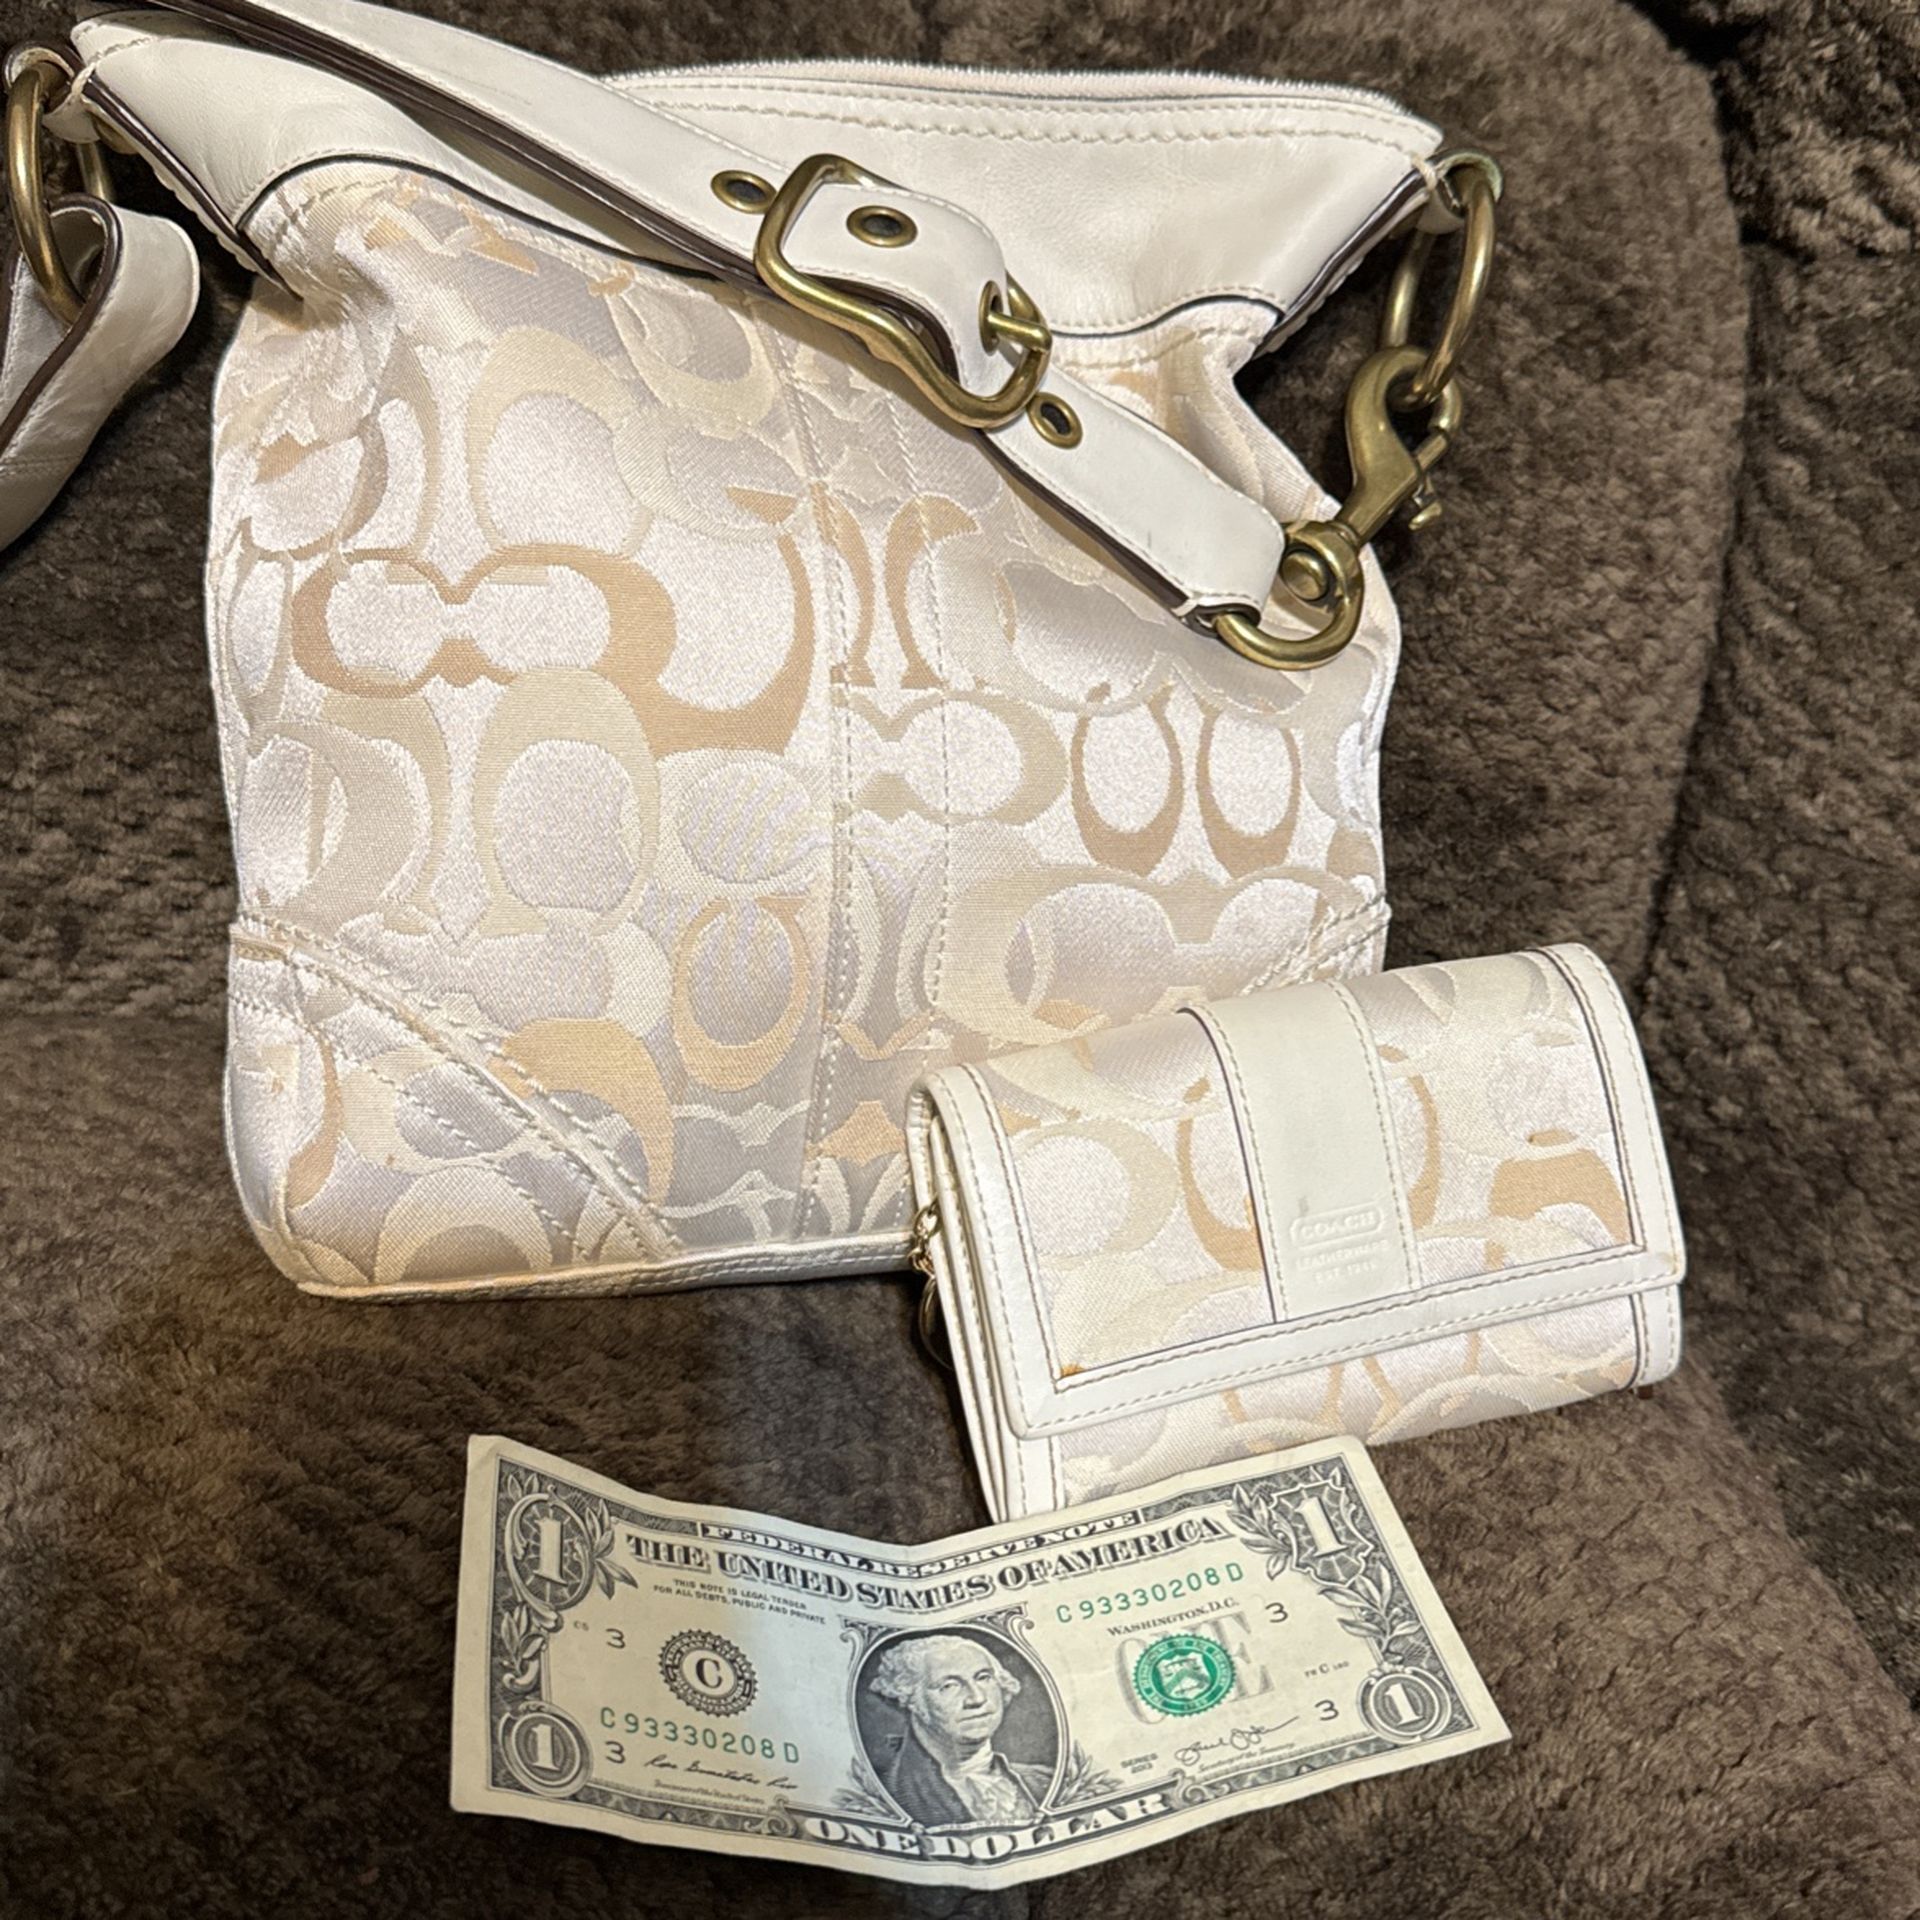 Cream Coach wallet And purse $150